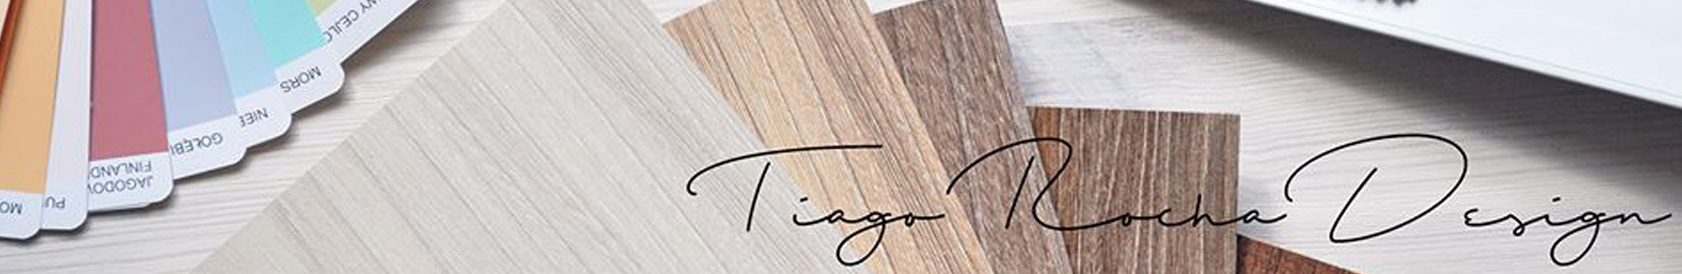 Tiago Rocha Design profil başlığı